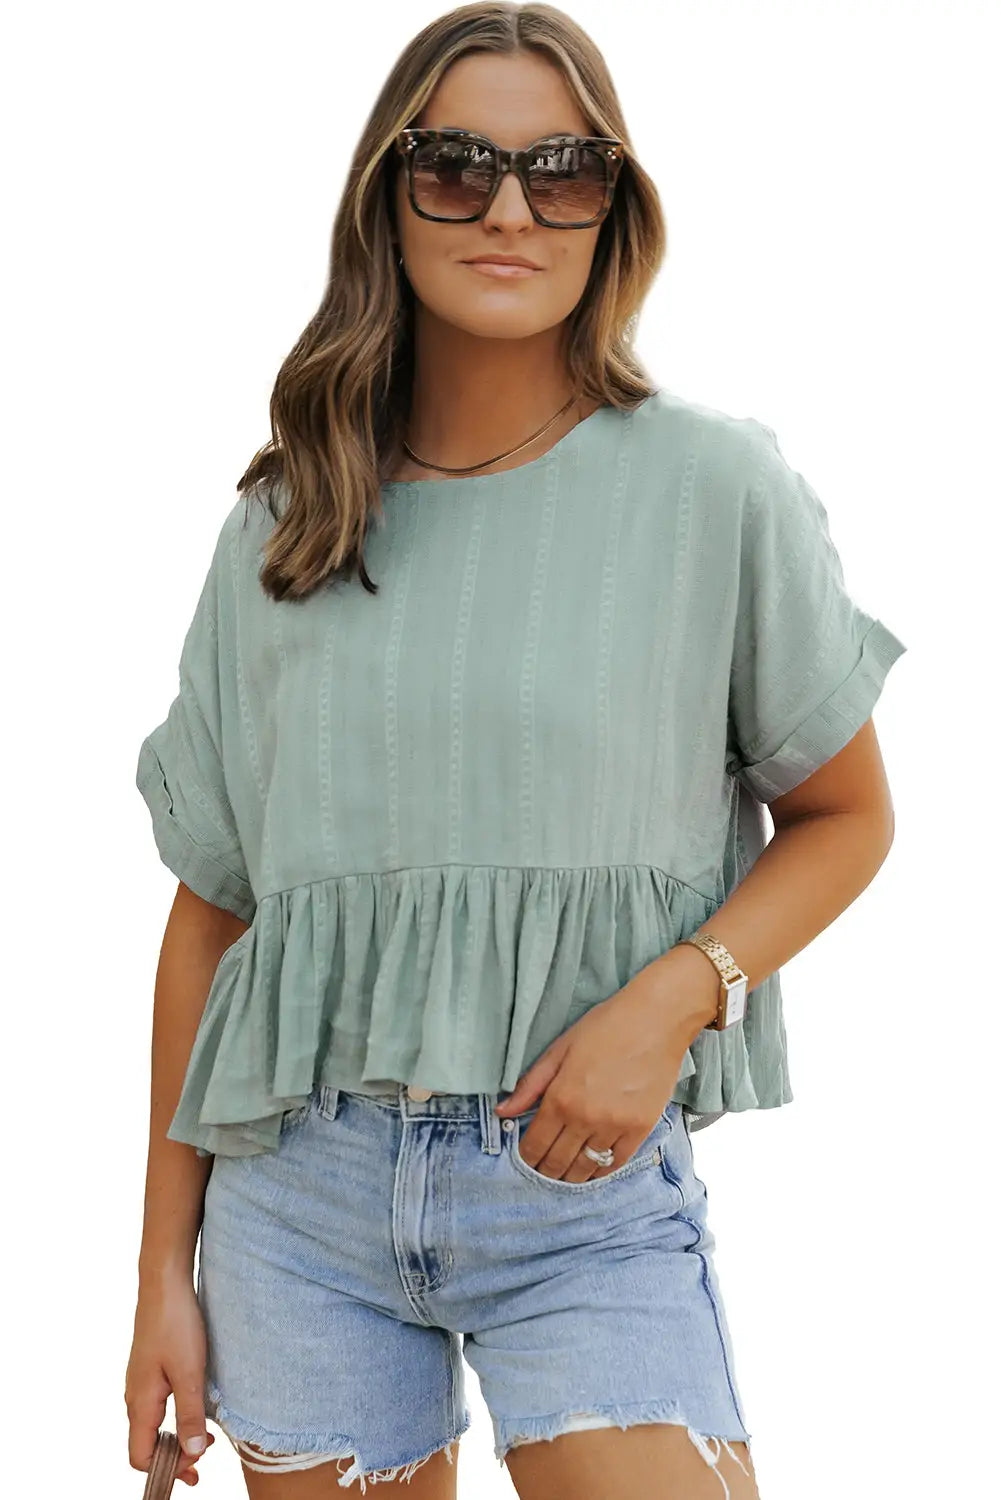 Laurel green short sleeve blouse - tops/blouses & shirts